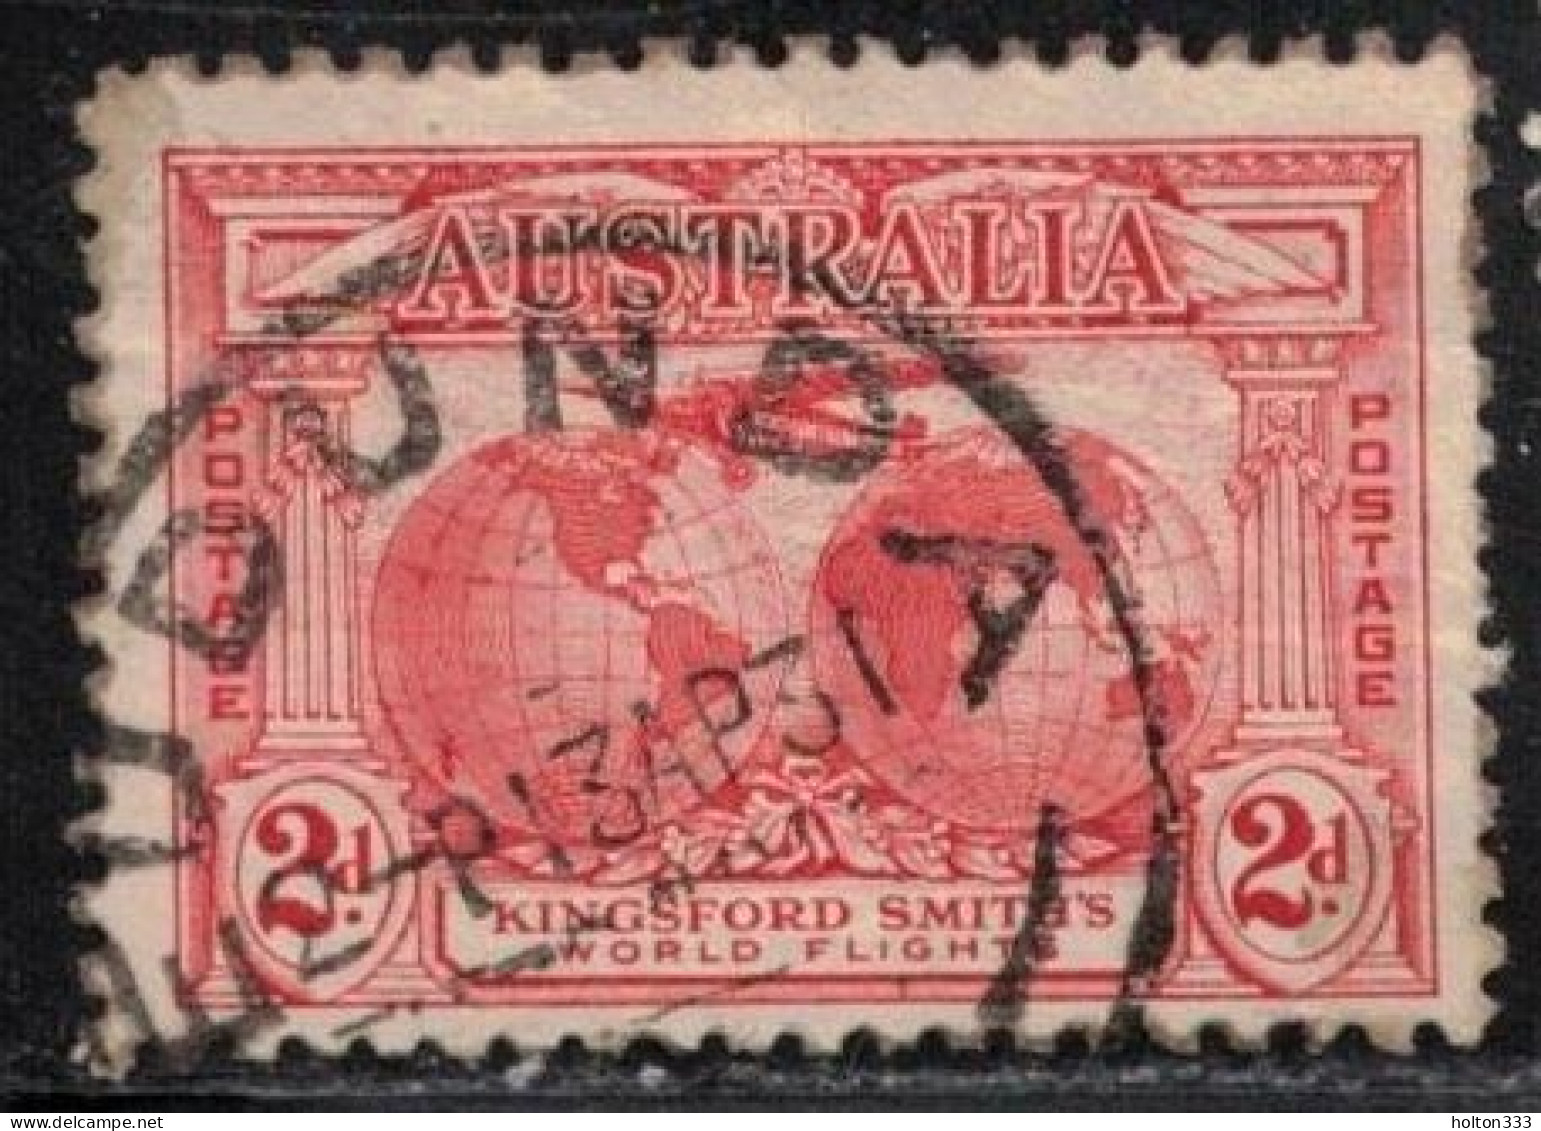 AUSTRALIA Scott # 111 Used - Kingsford Smith's World Flight - Gebraucht